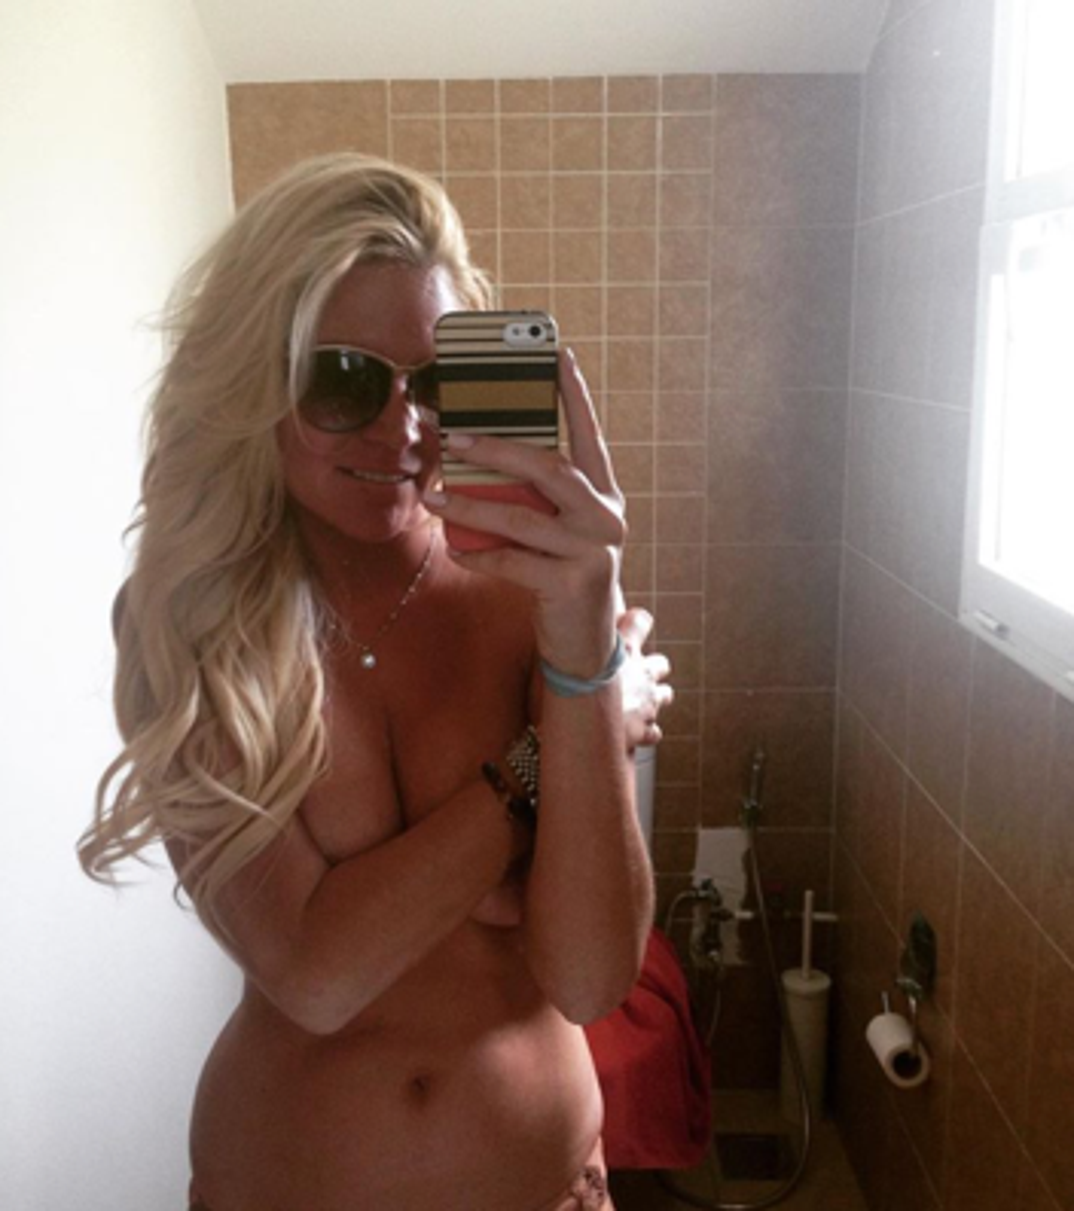 alex keedwell share hot blondes selfies photos